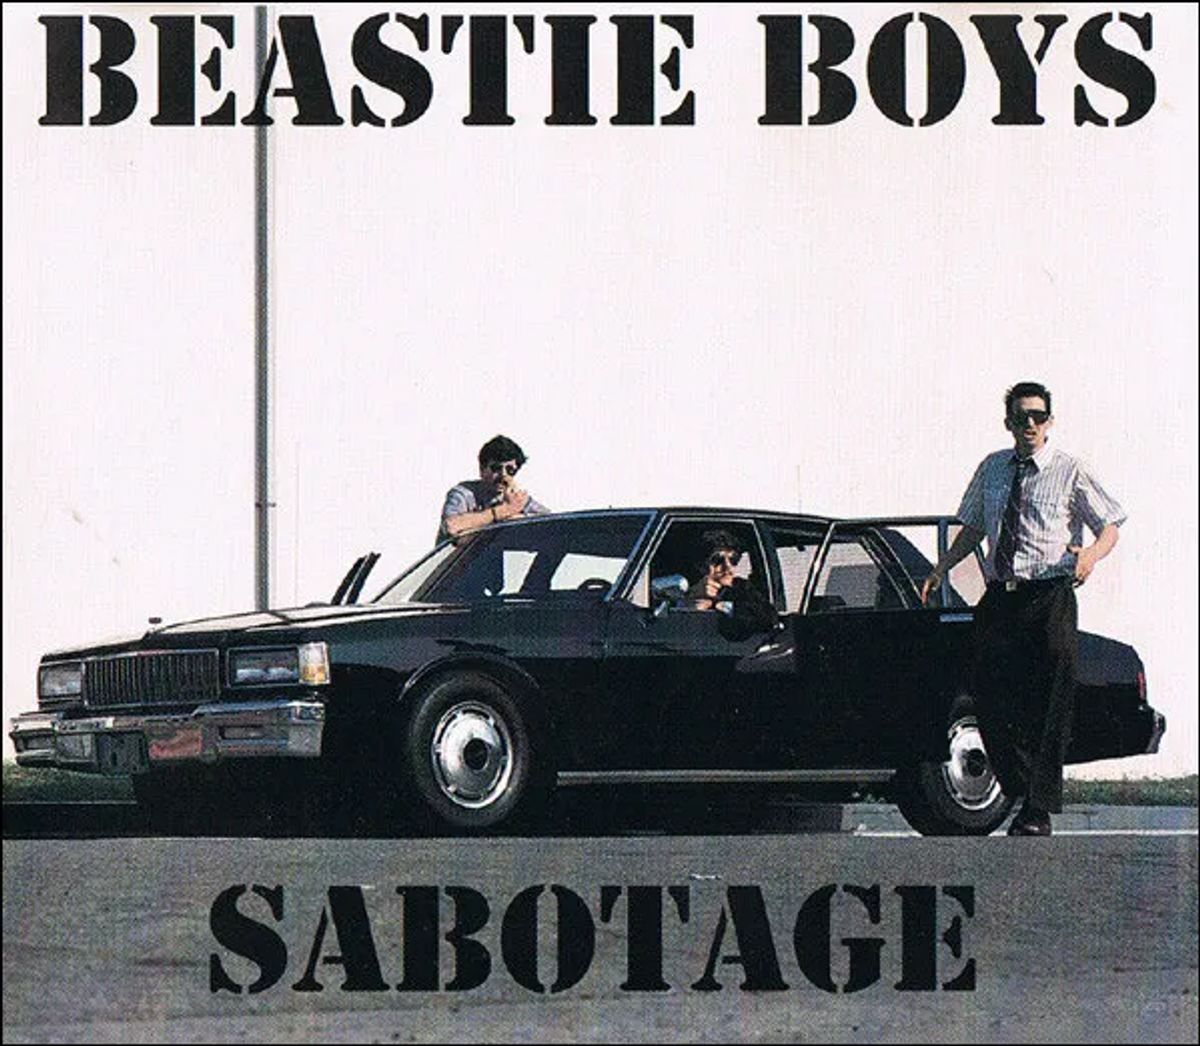 #Nineties - The Beastie Boys - Sabotage (1994)